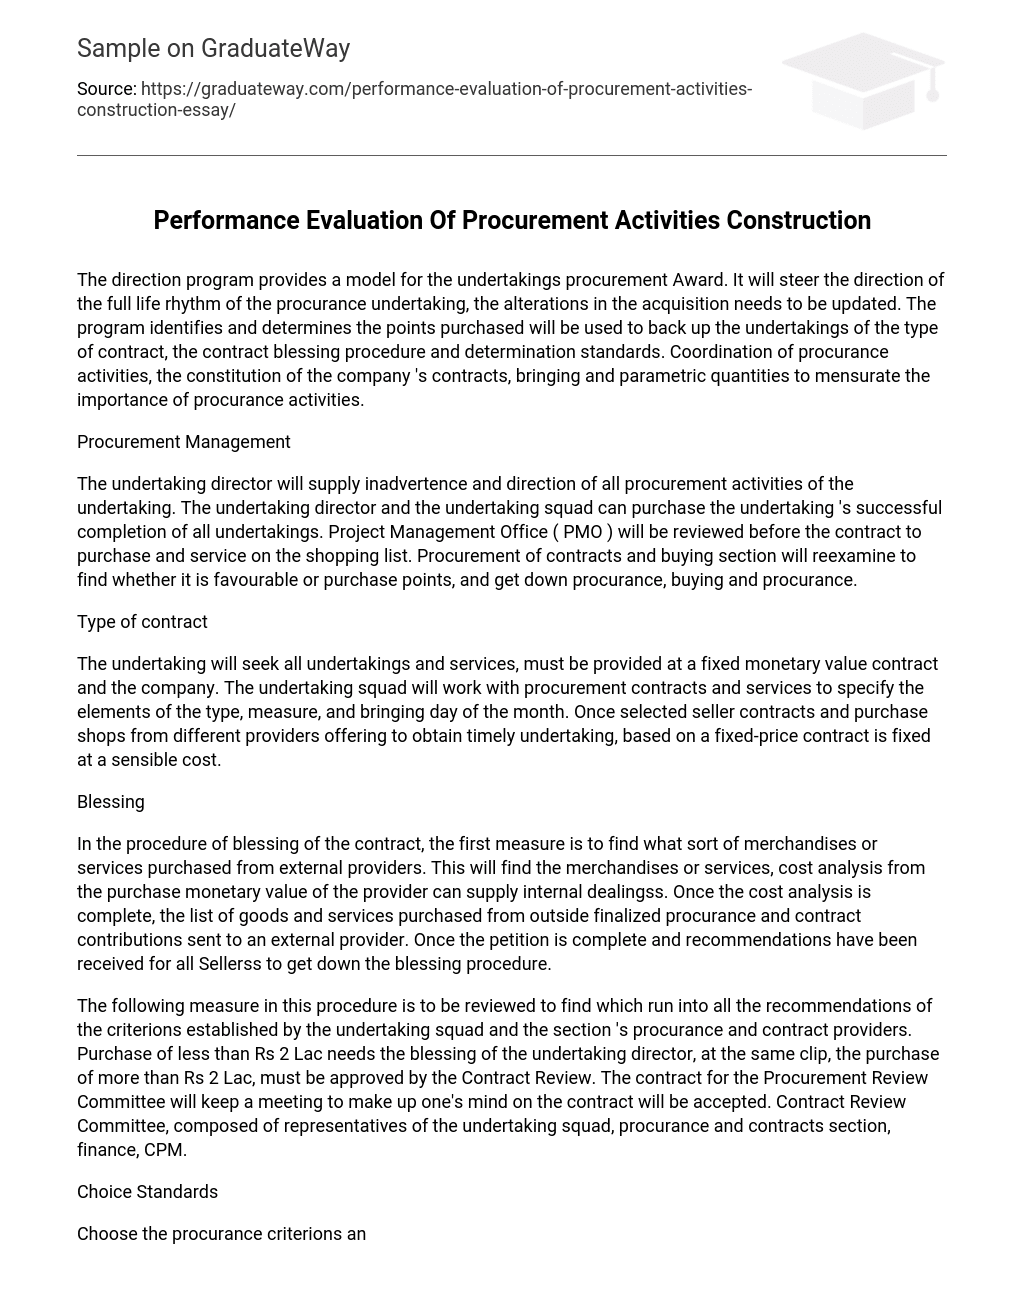 Performance Evaluation Of Procurement Activities Construction